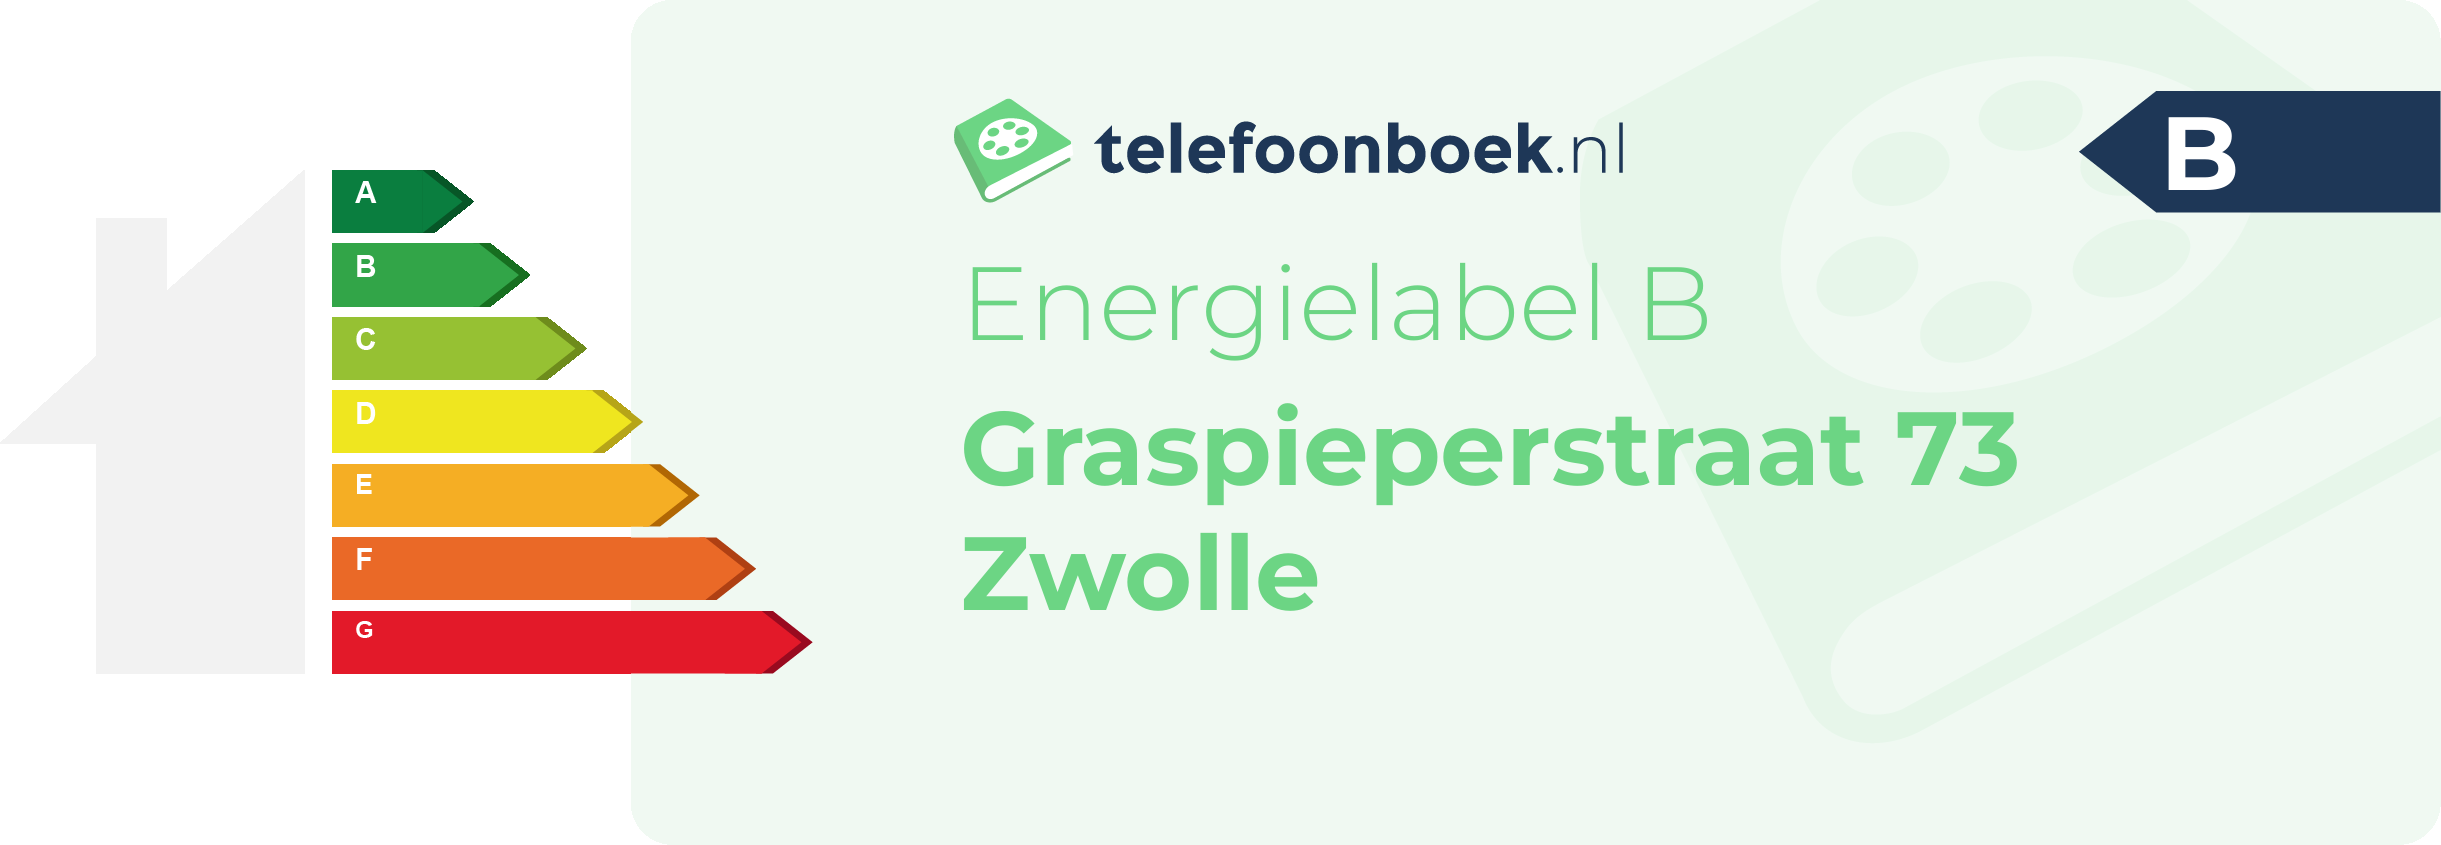 Energielabel Graspieperstraat 73 Zwolle